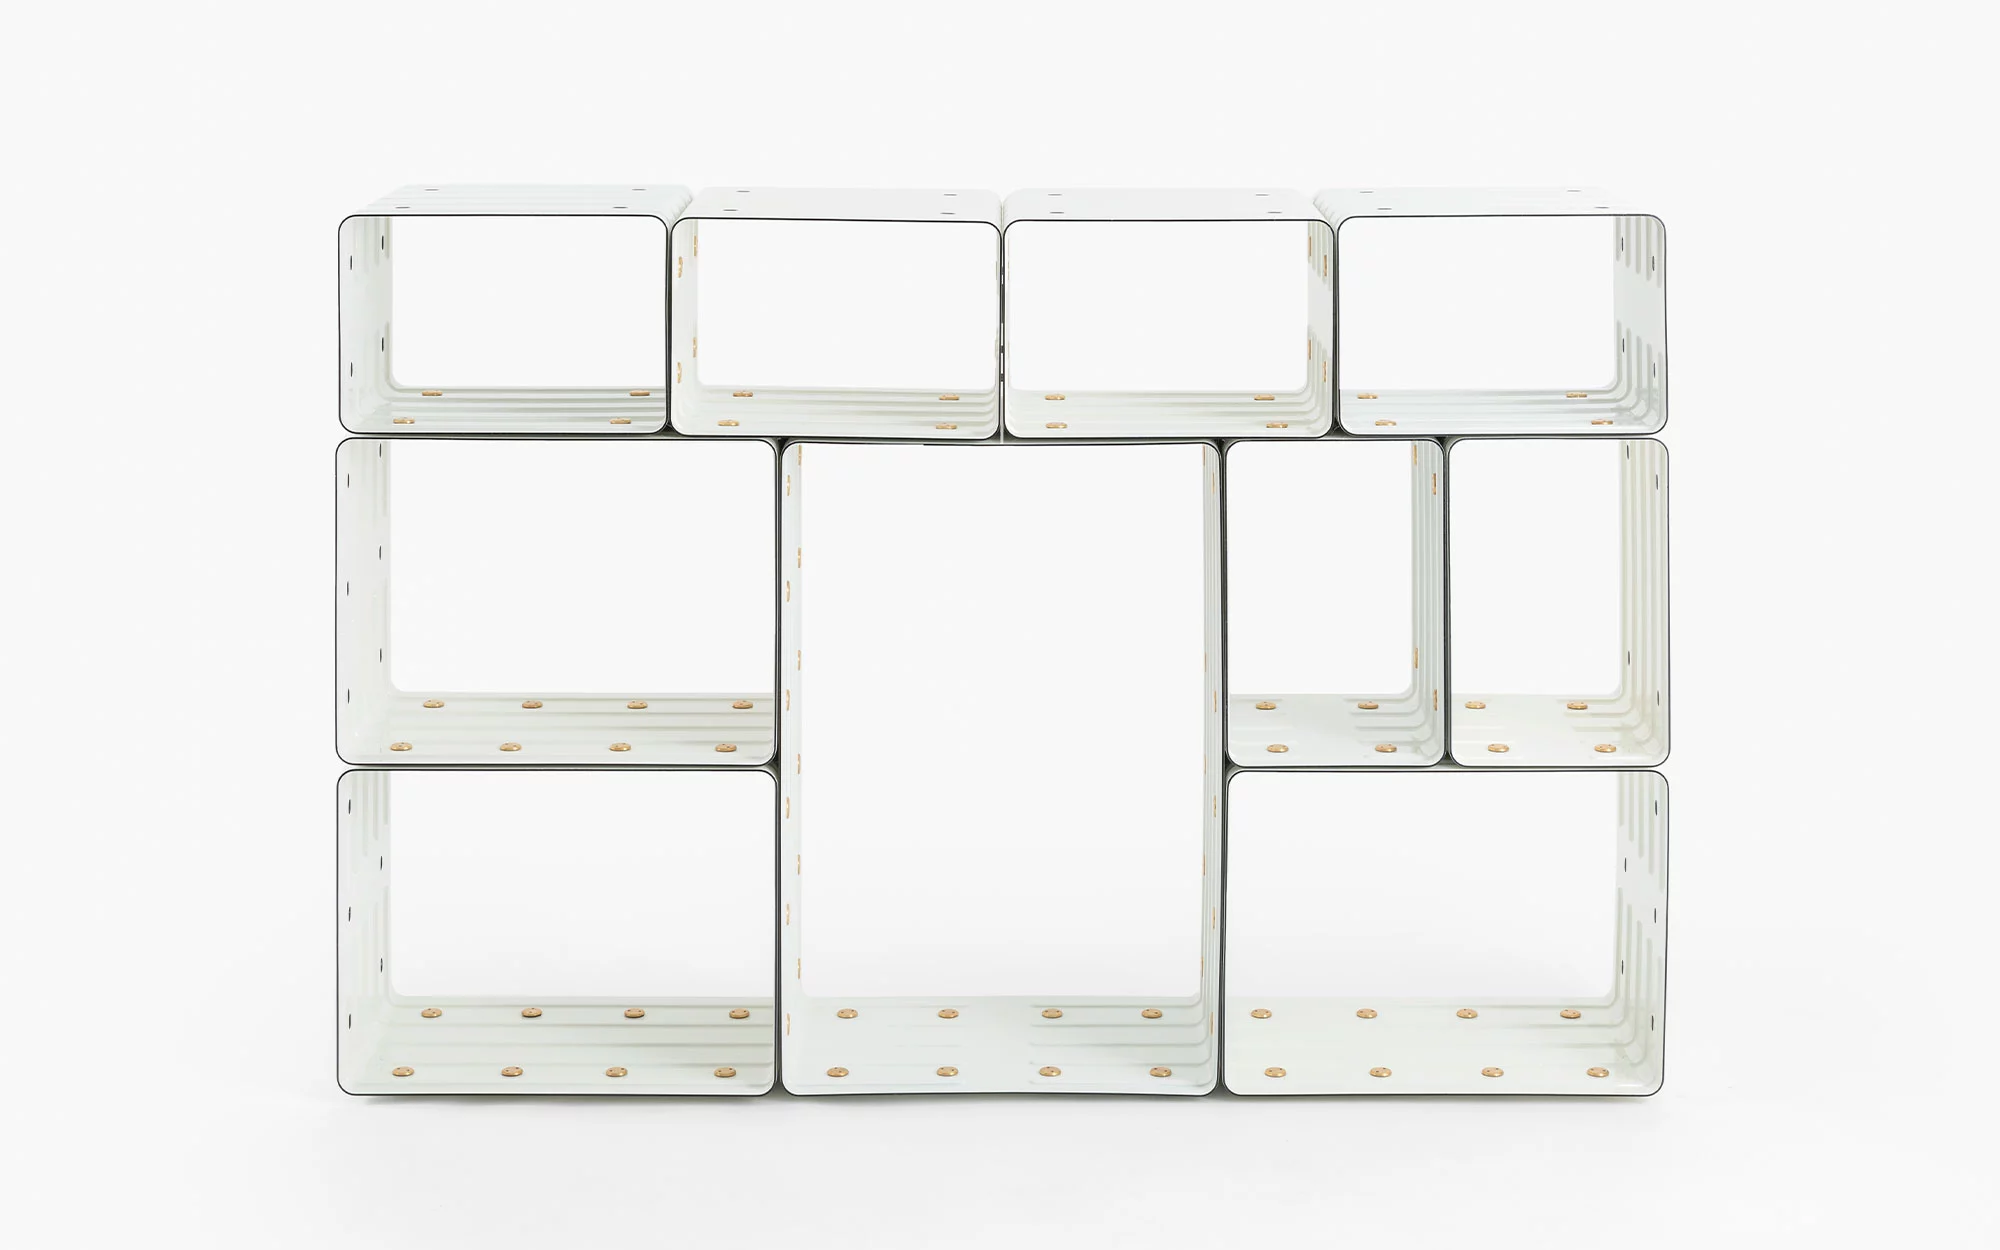 Quobus 1,3,6 monochromatic - Marc Newson - Chair - Galerie kreo